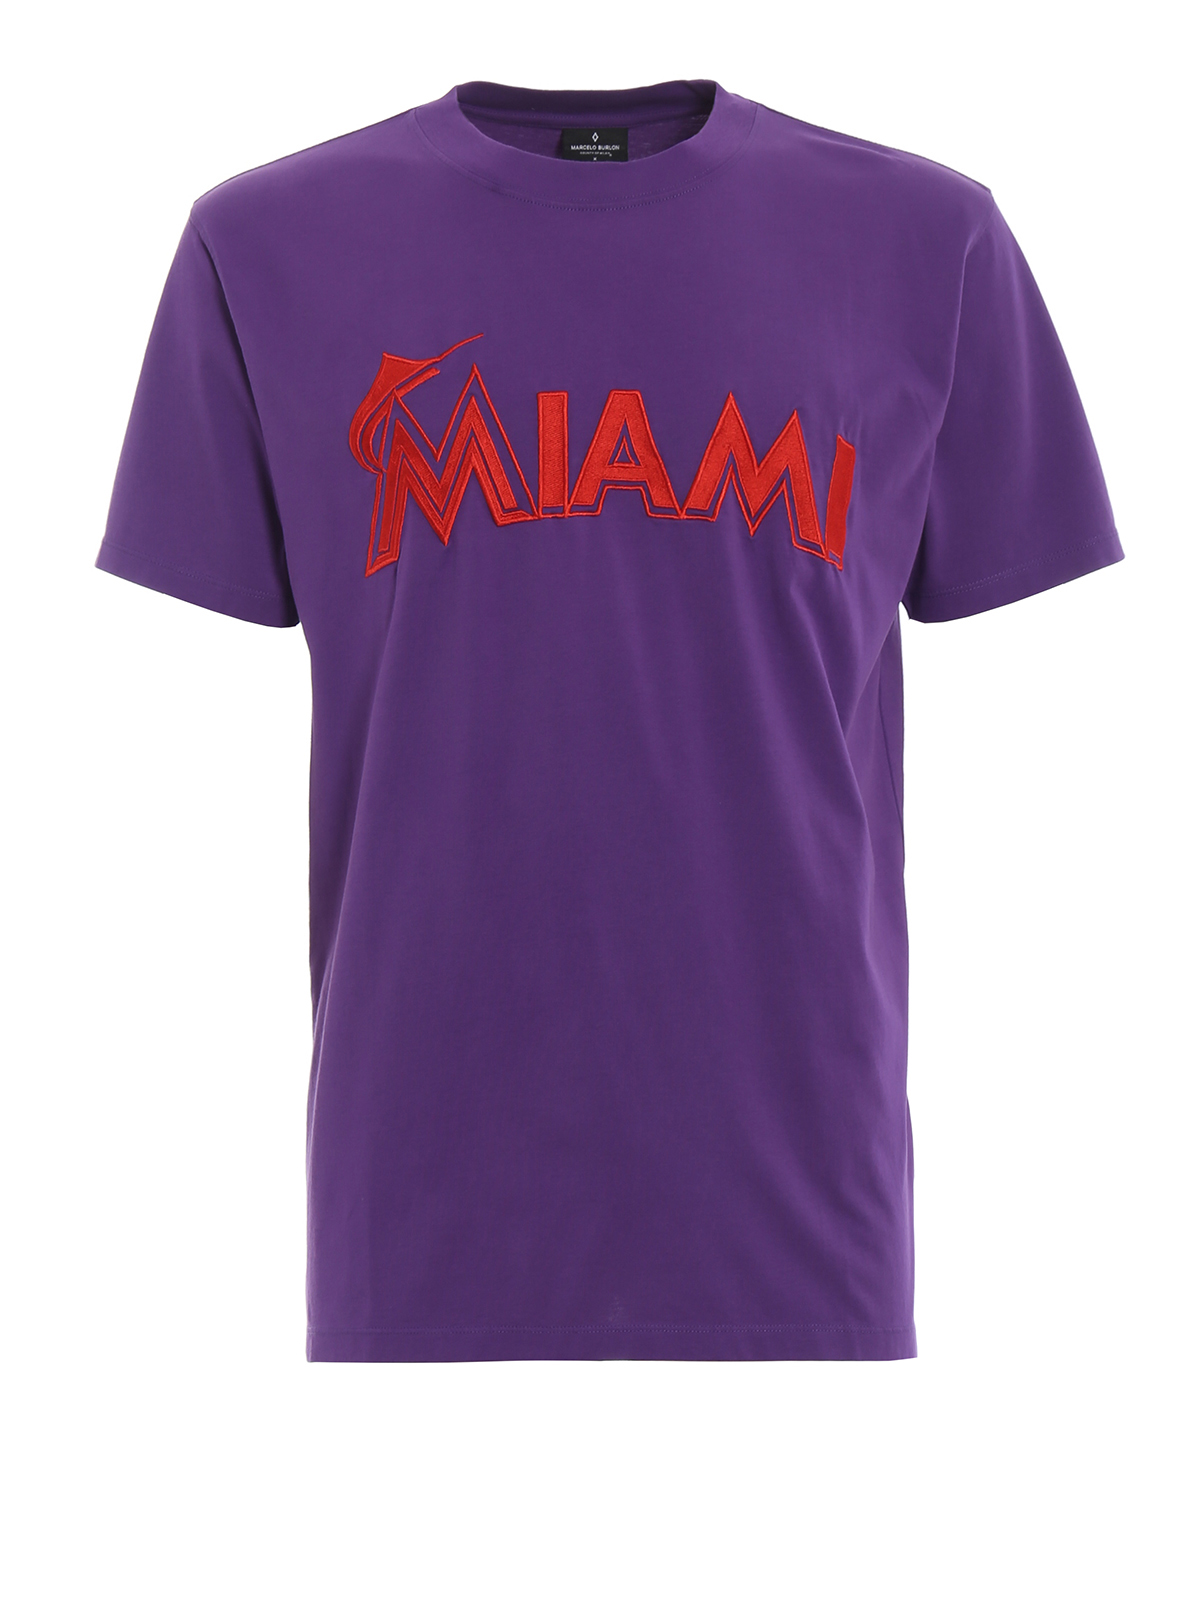 T-shirts Marcelo Burlon - Miami Marlins T-shirt - CMAA018F180010292918